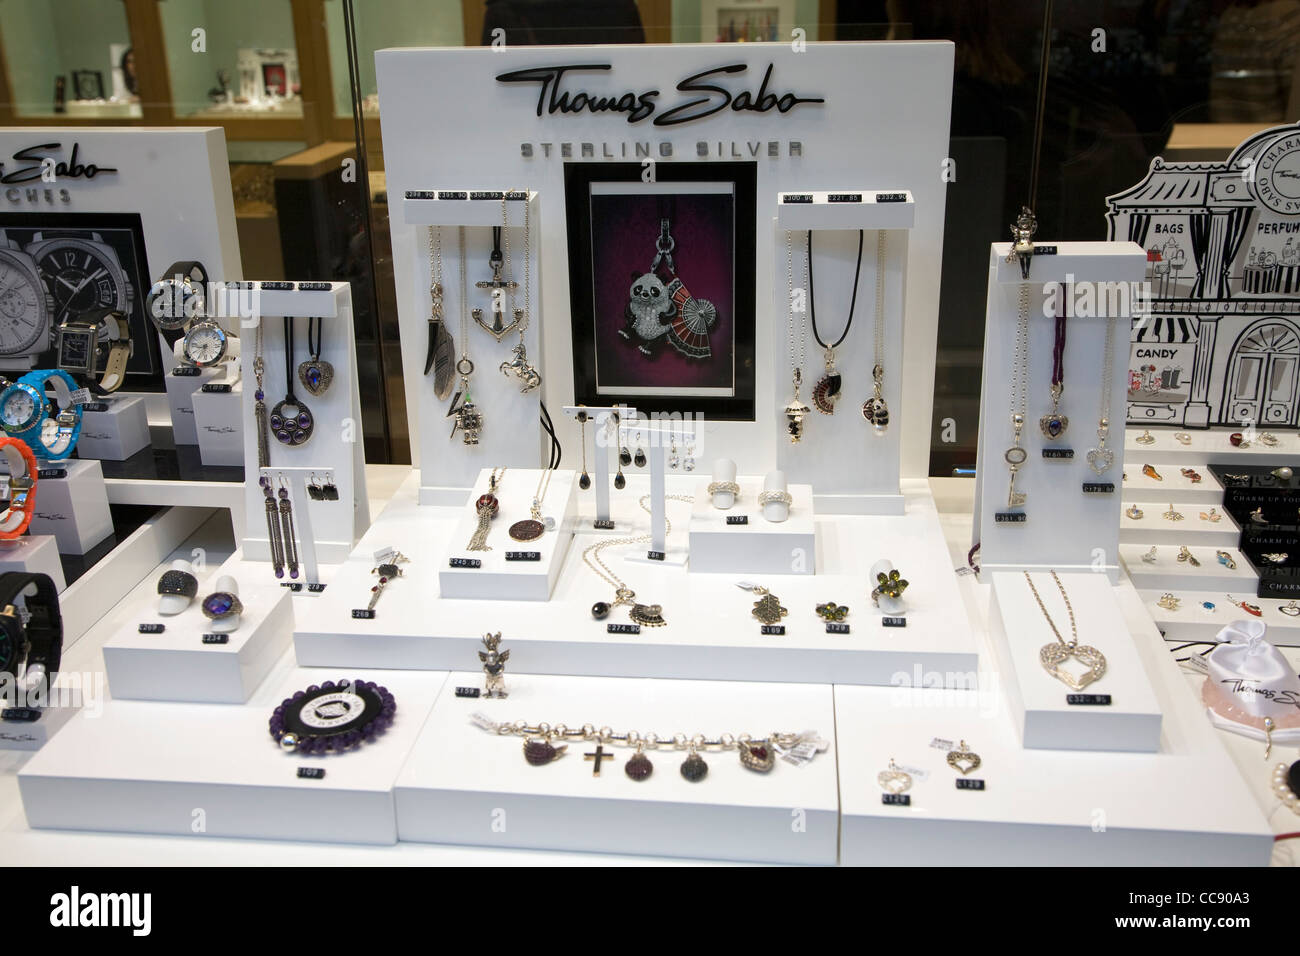 Thomas Sabo jewelery display shop window Stock Photo - Alamy